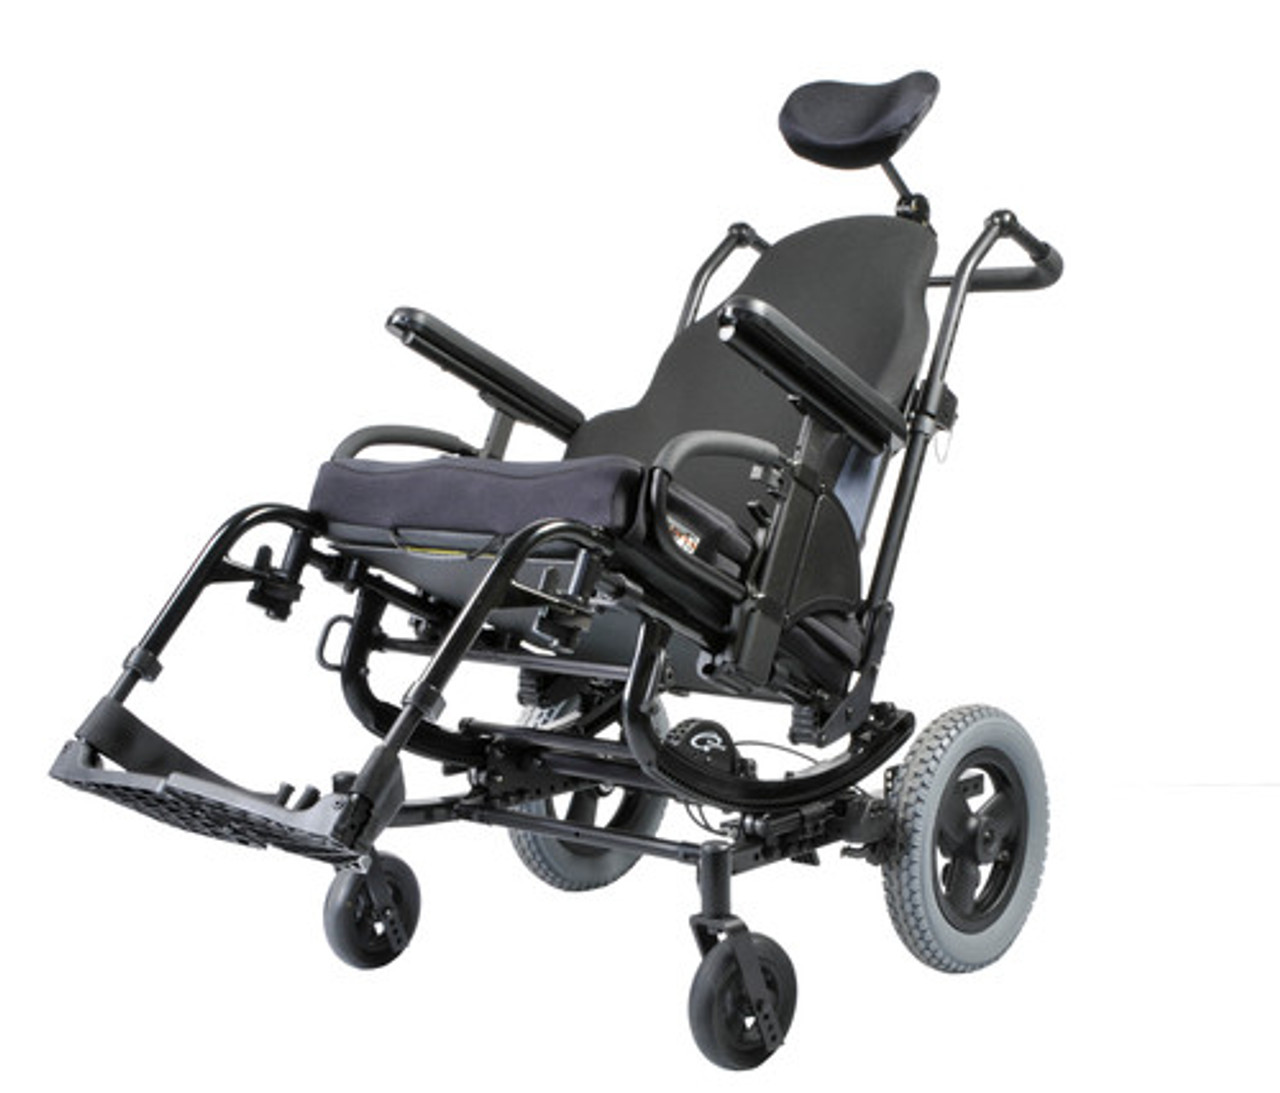 Jay X2 Wheelchair Cushion, by Sunrise Medical